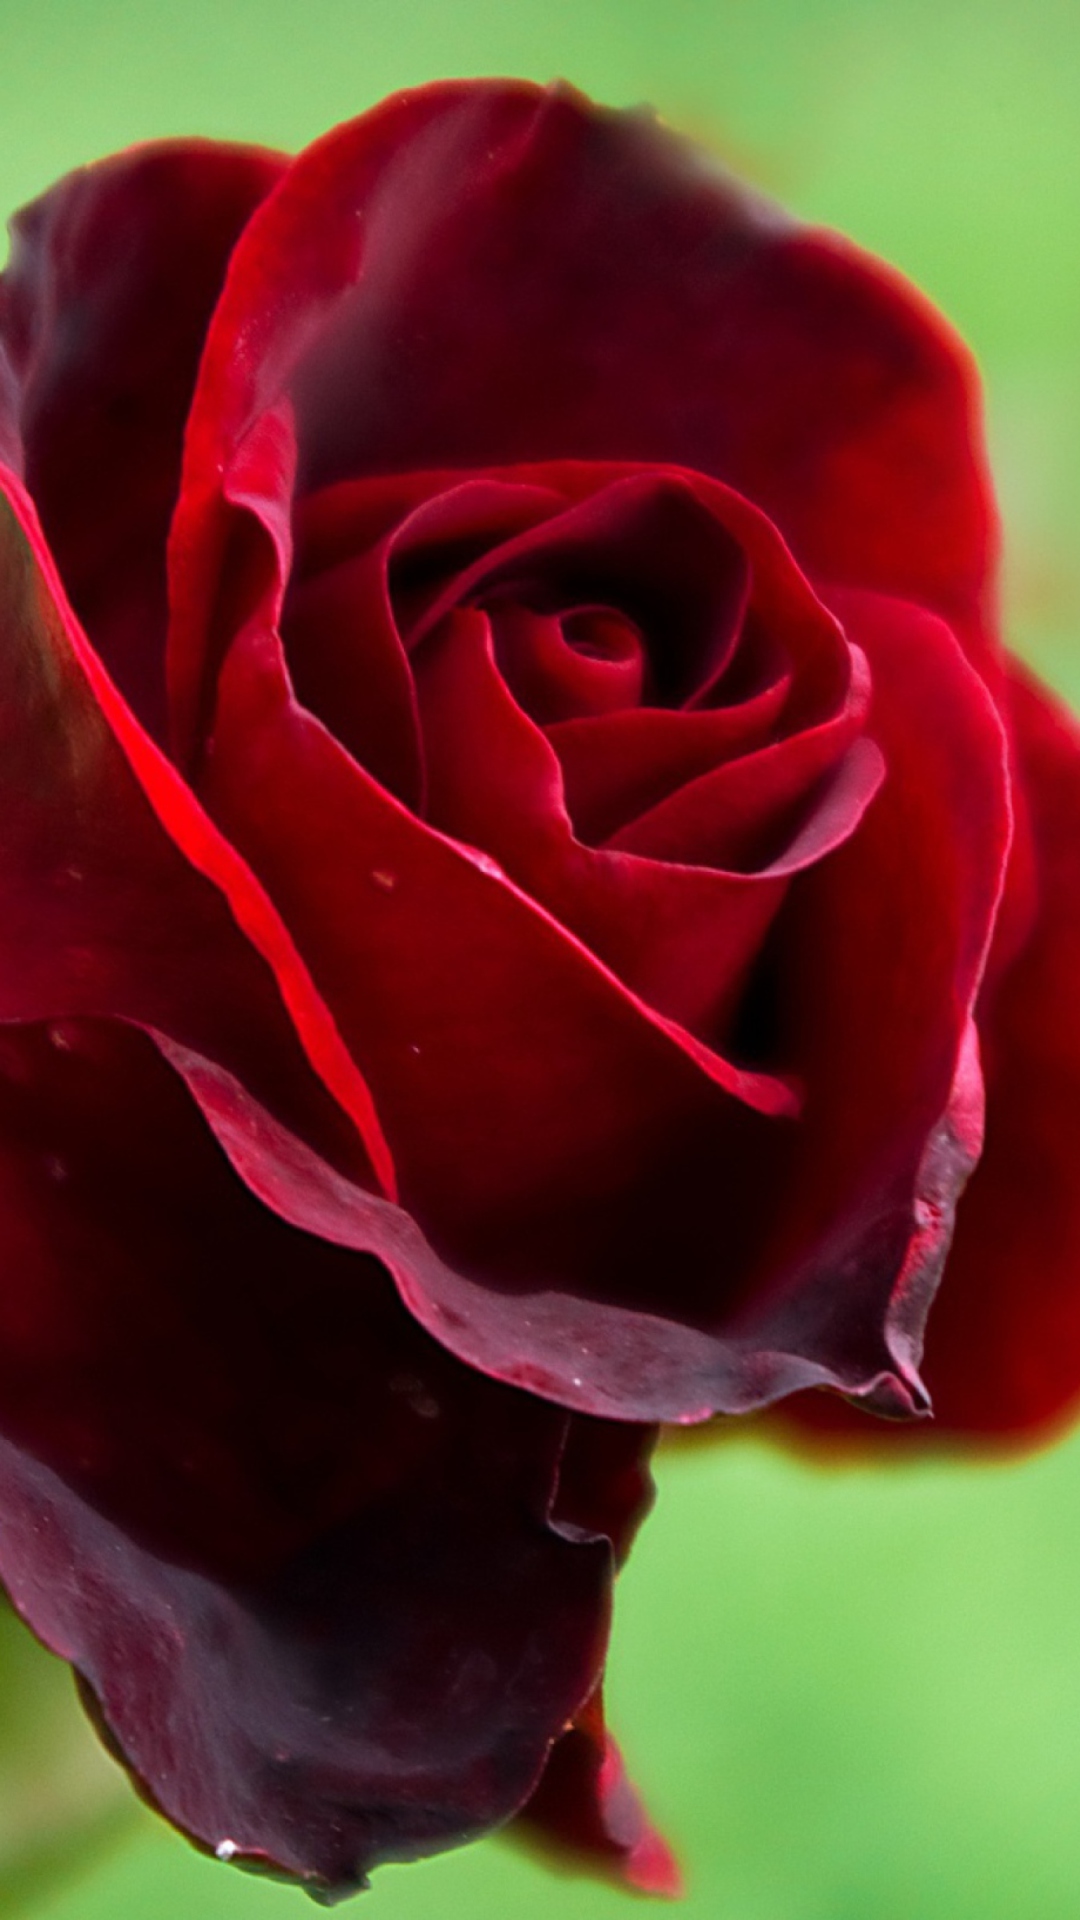 Red Rose wallpaper 1080x1920